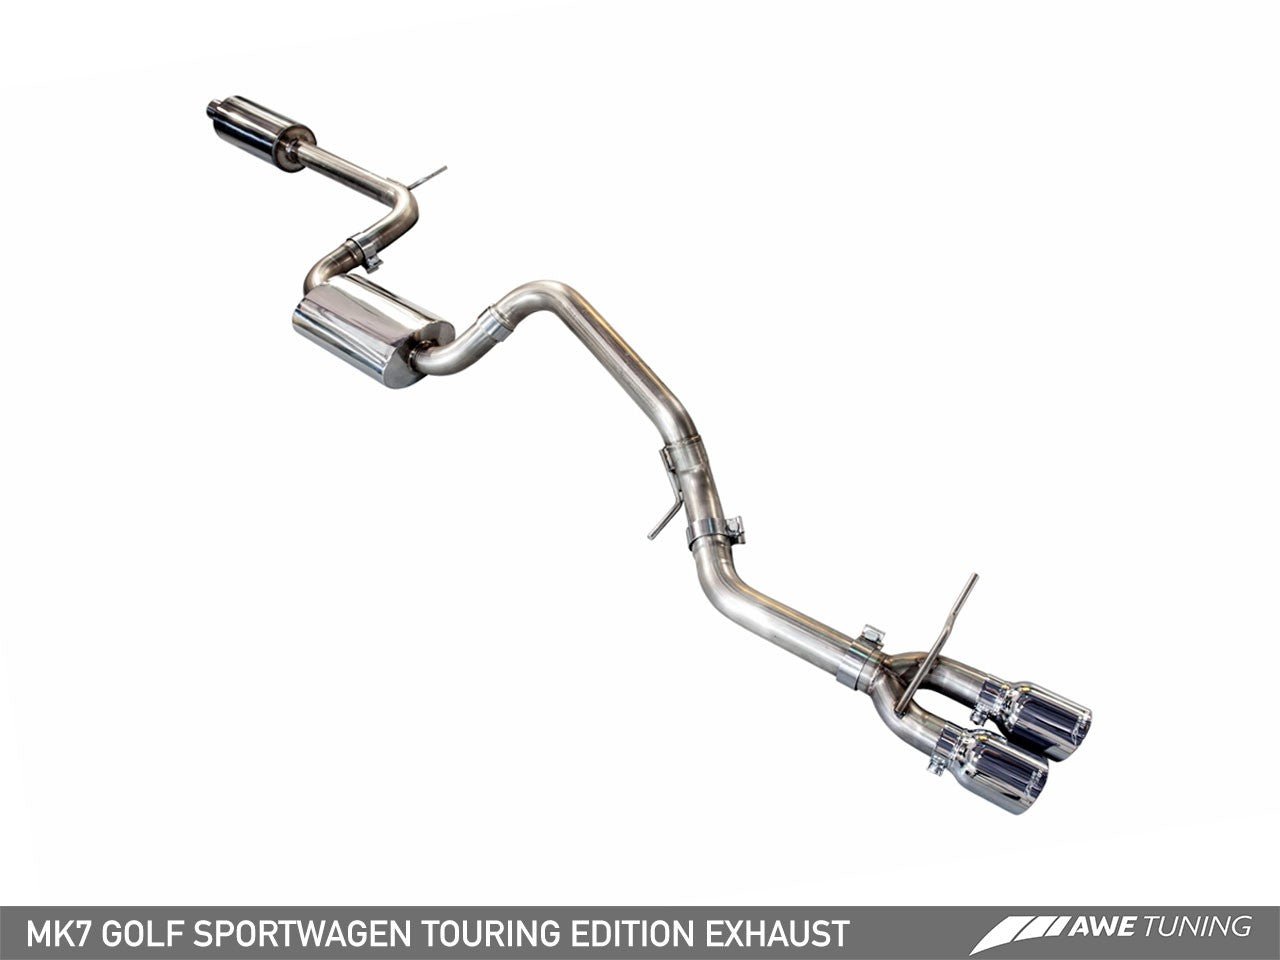 AWE Touring Edition Exhaust for VW MK7 Golf SportWagen - Motorsports LA